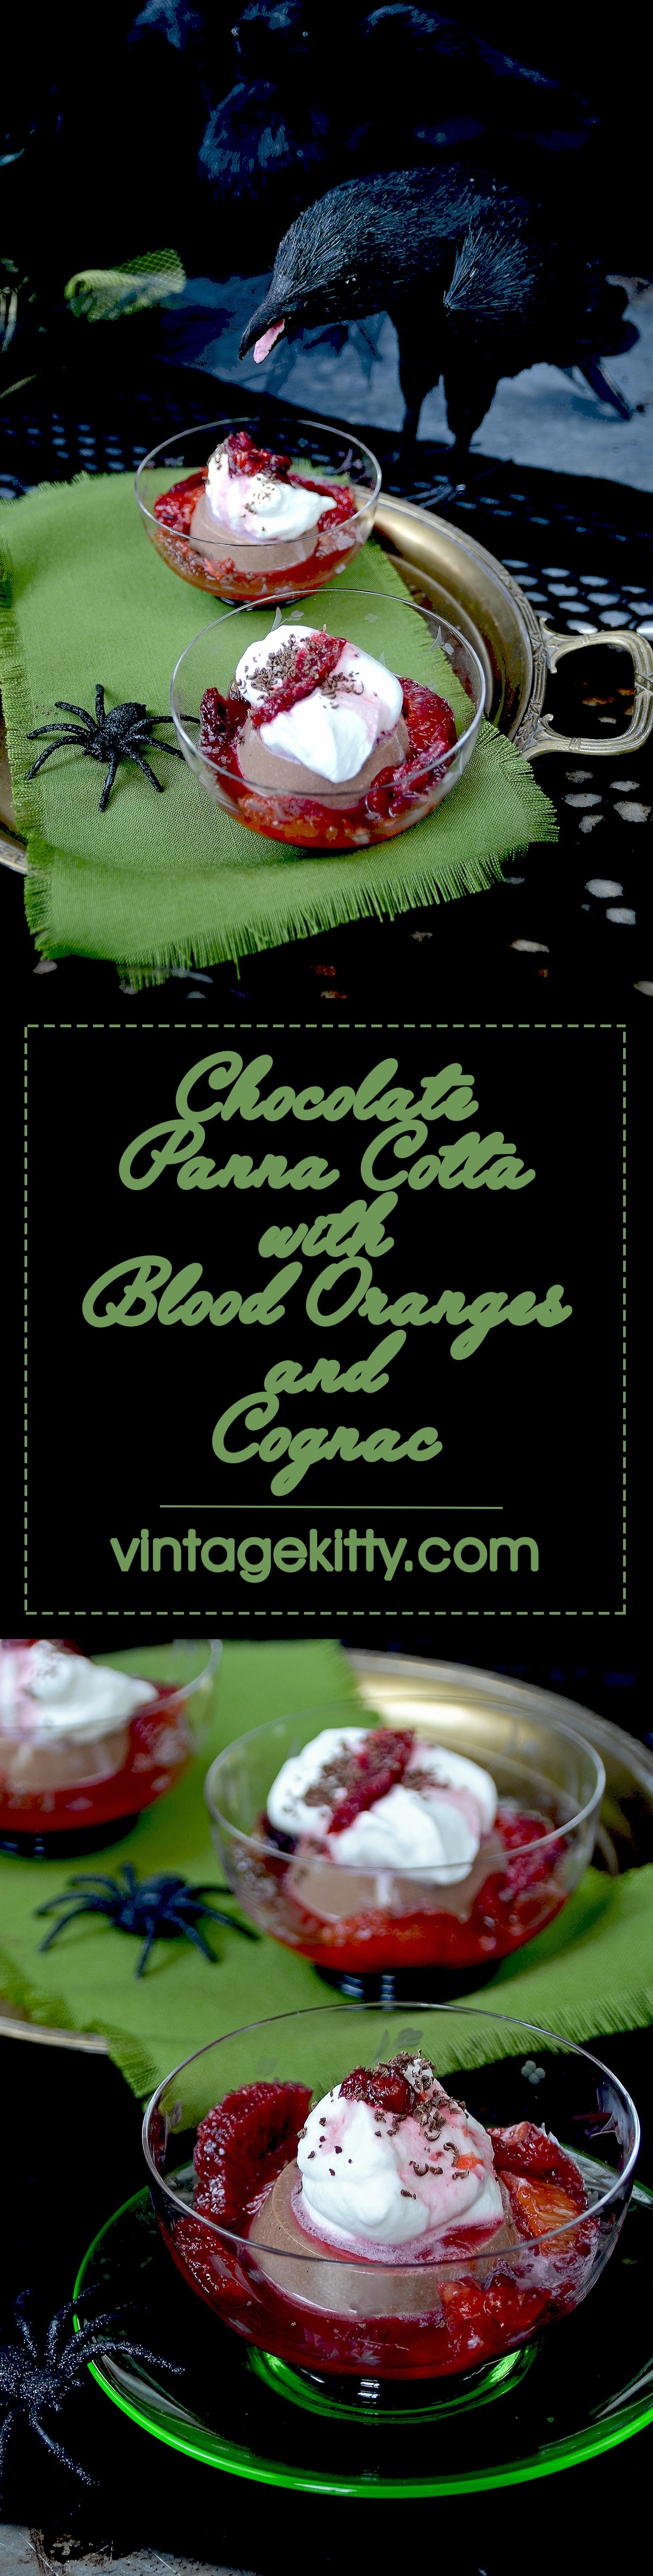 Panna Cotta Pin - Chocolate Panna Cotta with Blood Oranges